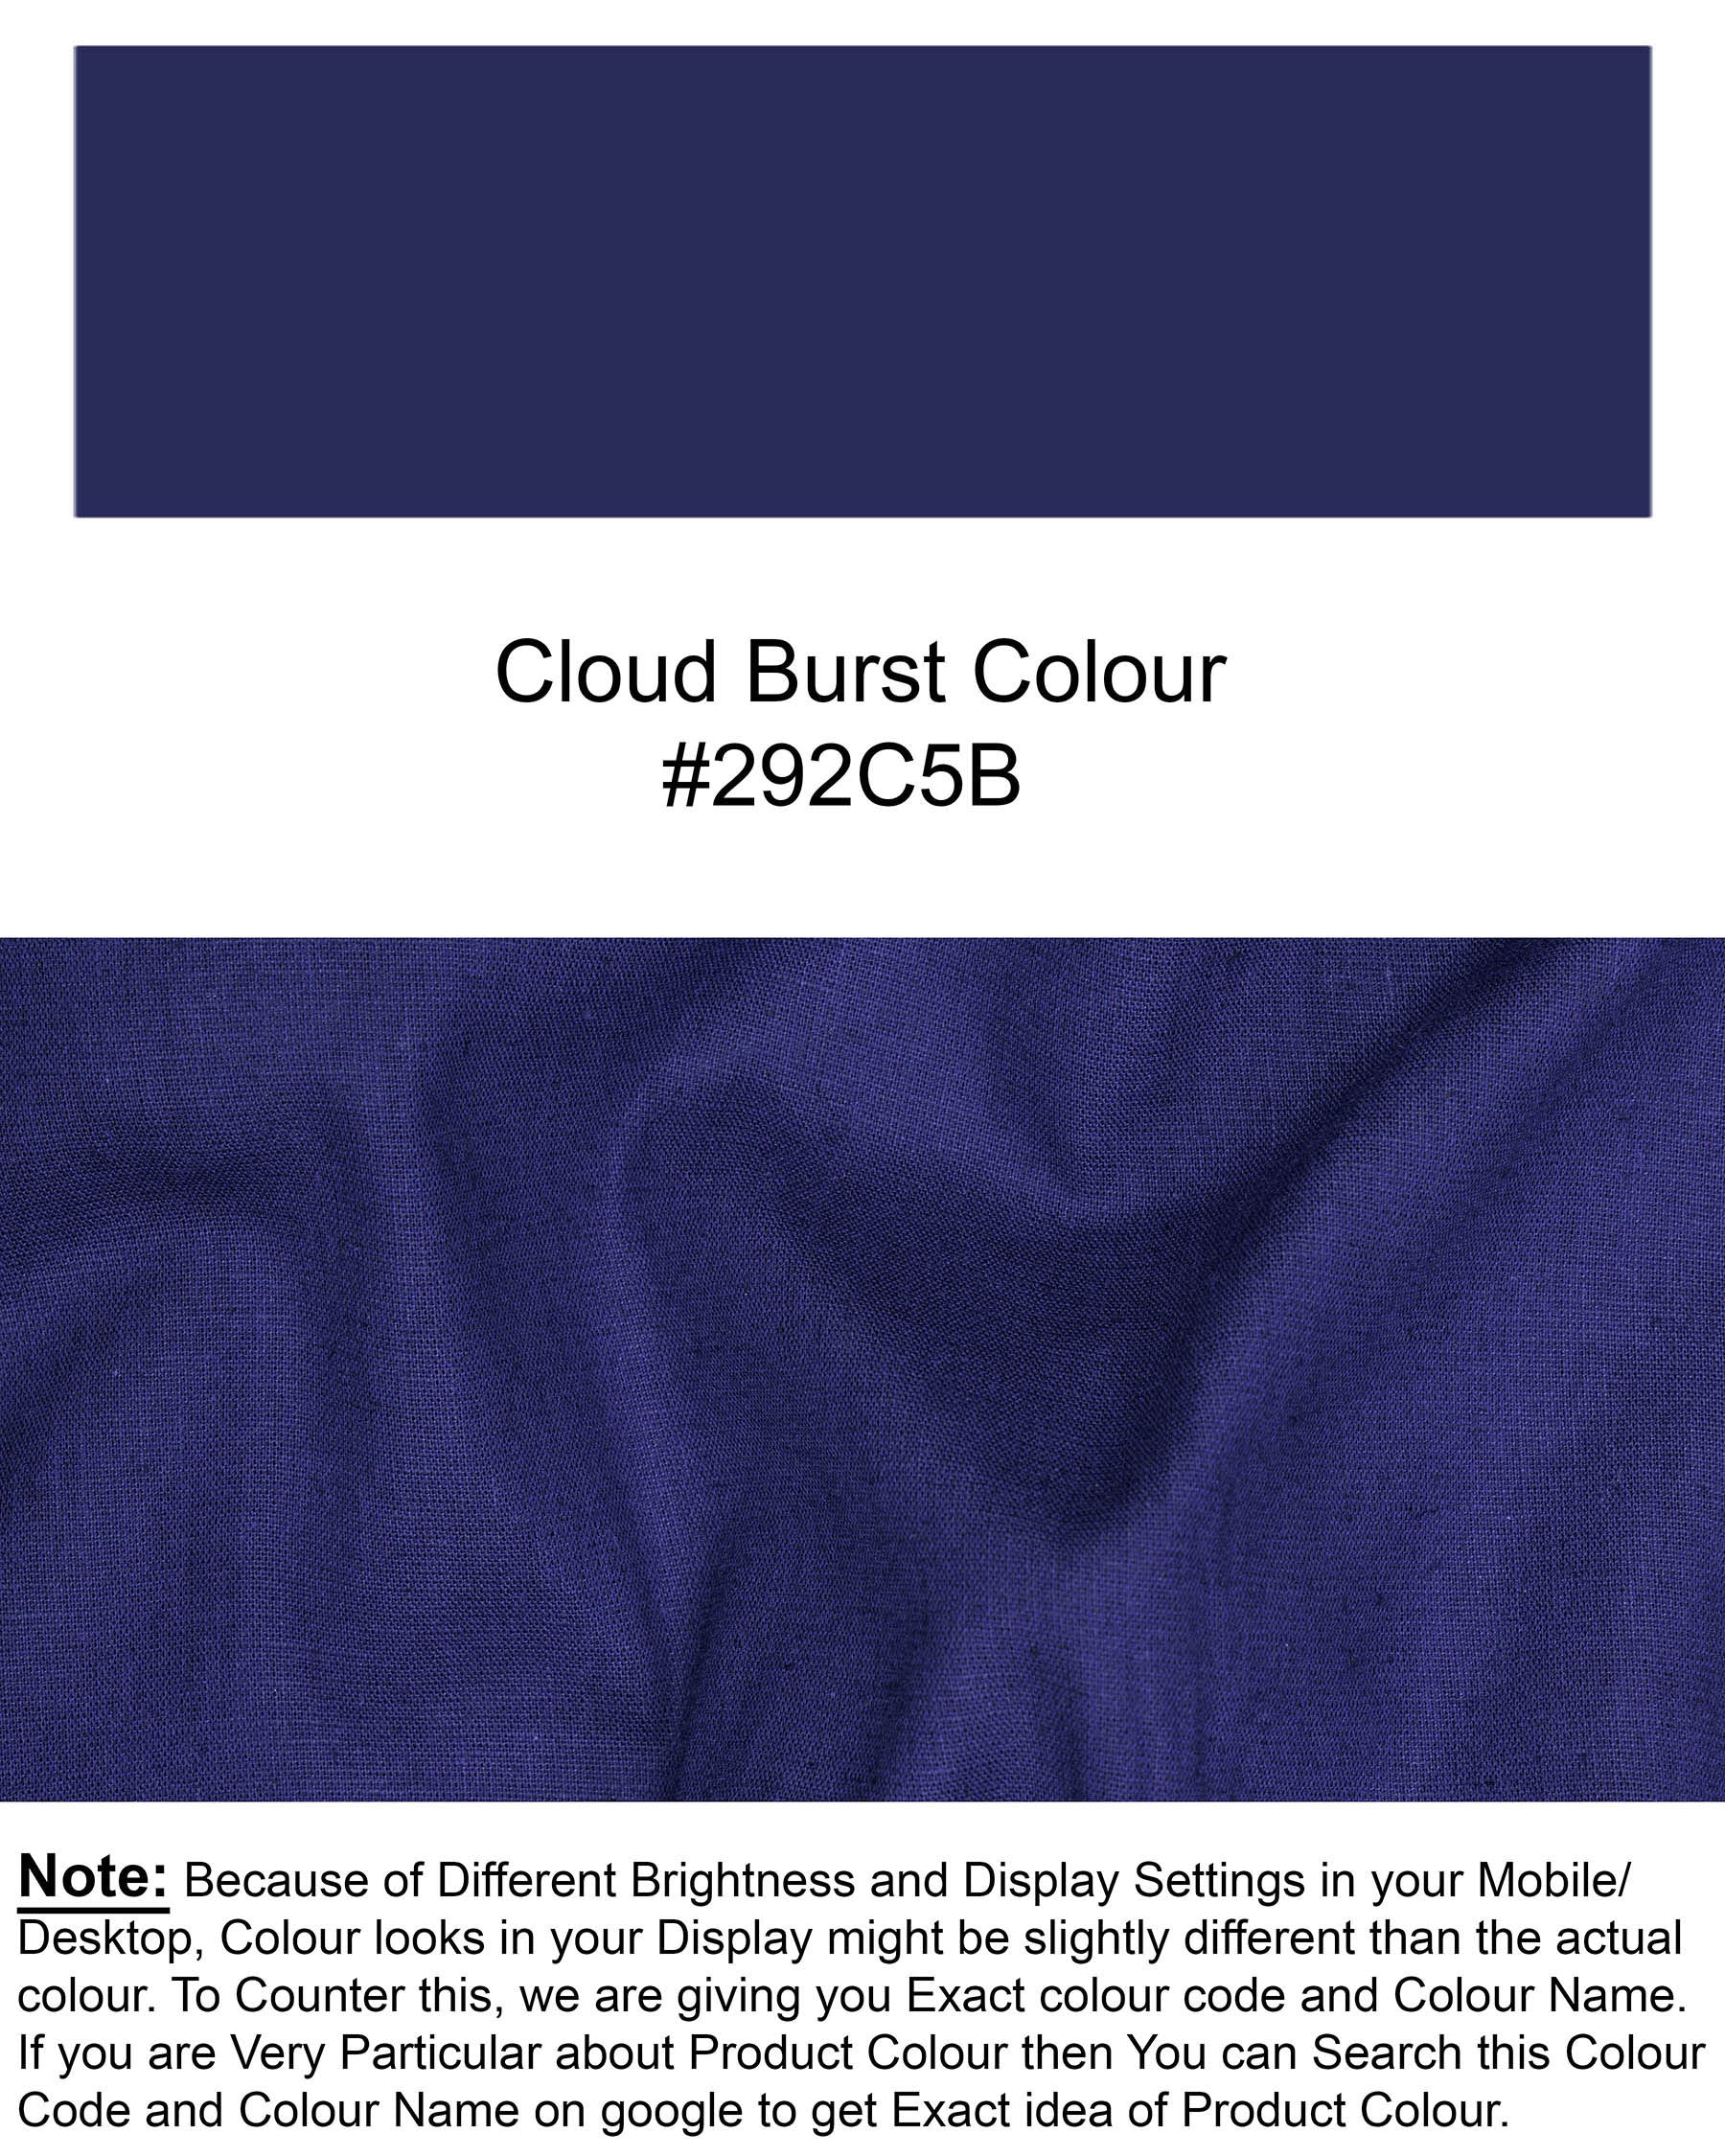 Cloud Burst Blue Pleated Luxurious Linen Tuxedo Shirt 6800-TXD-38,6800-TXD-38,6800-TXD-39,6800-TXD-39,6800-TXD-40,6800-TXD-40,6800-TXD-42,6800-TXD-42,6800-TXD-44,6800-TXD-44,6800-TXD-46,6800-TXD-46,6800-TXD-48,6800-TXD-48,6800-TXD-50,6800-TXD-50,6800-TXD-52,6800-TXD-52